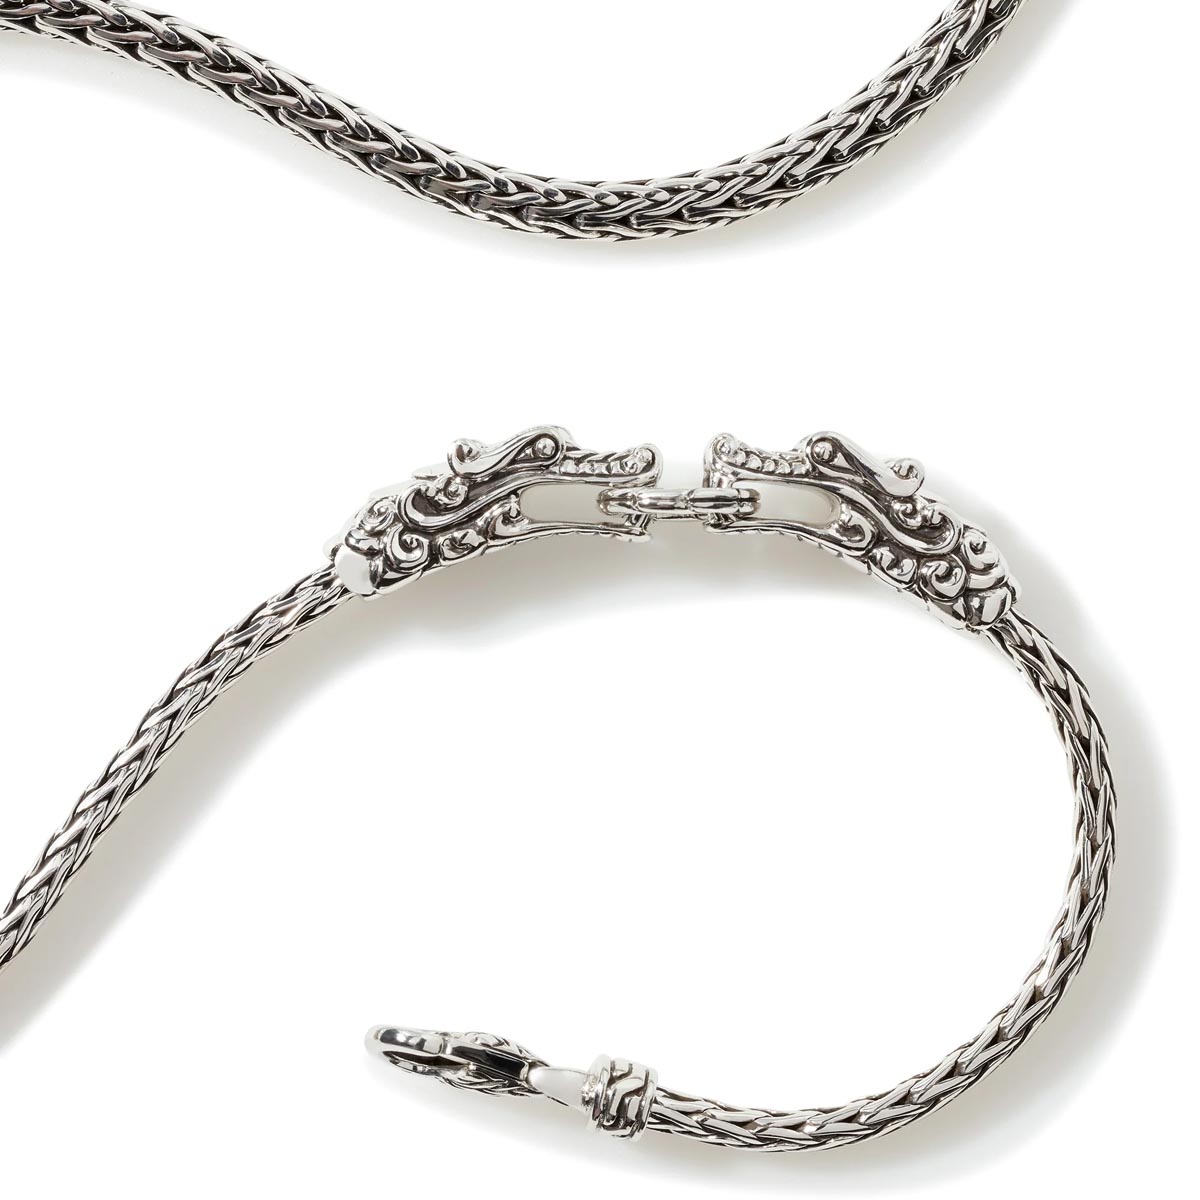 John Hardy Legends Naga Collection Double Dragon Head Wrap Bracelet in Sterling Silver